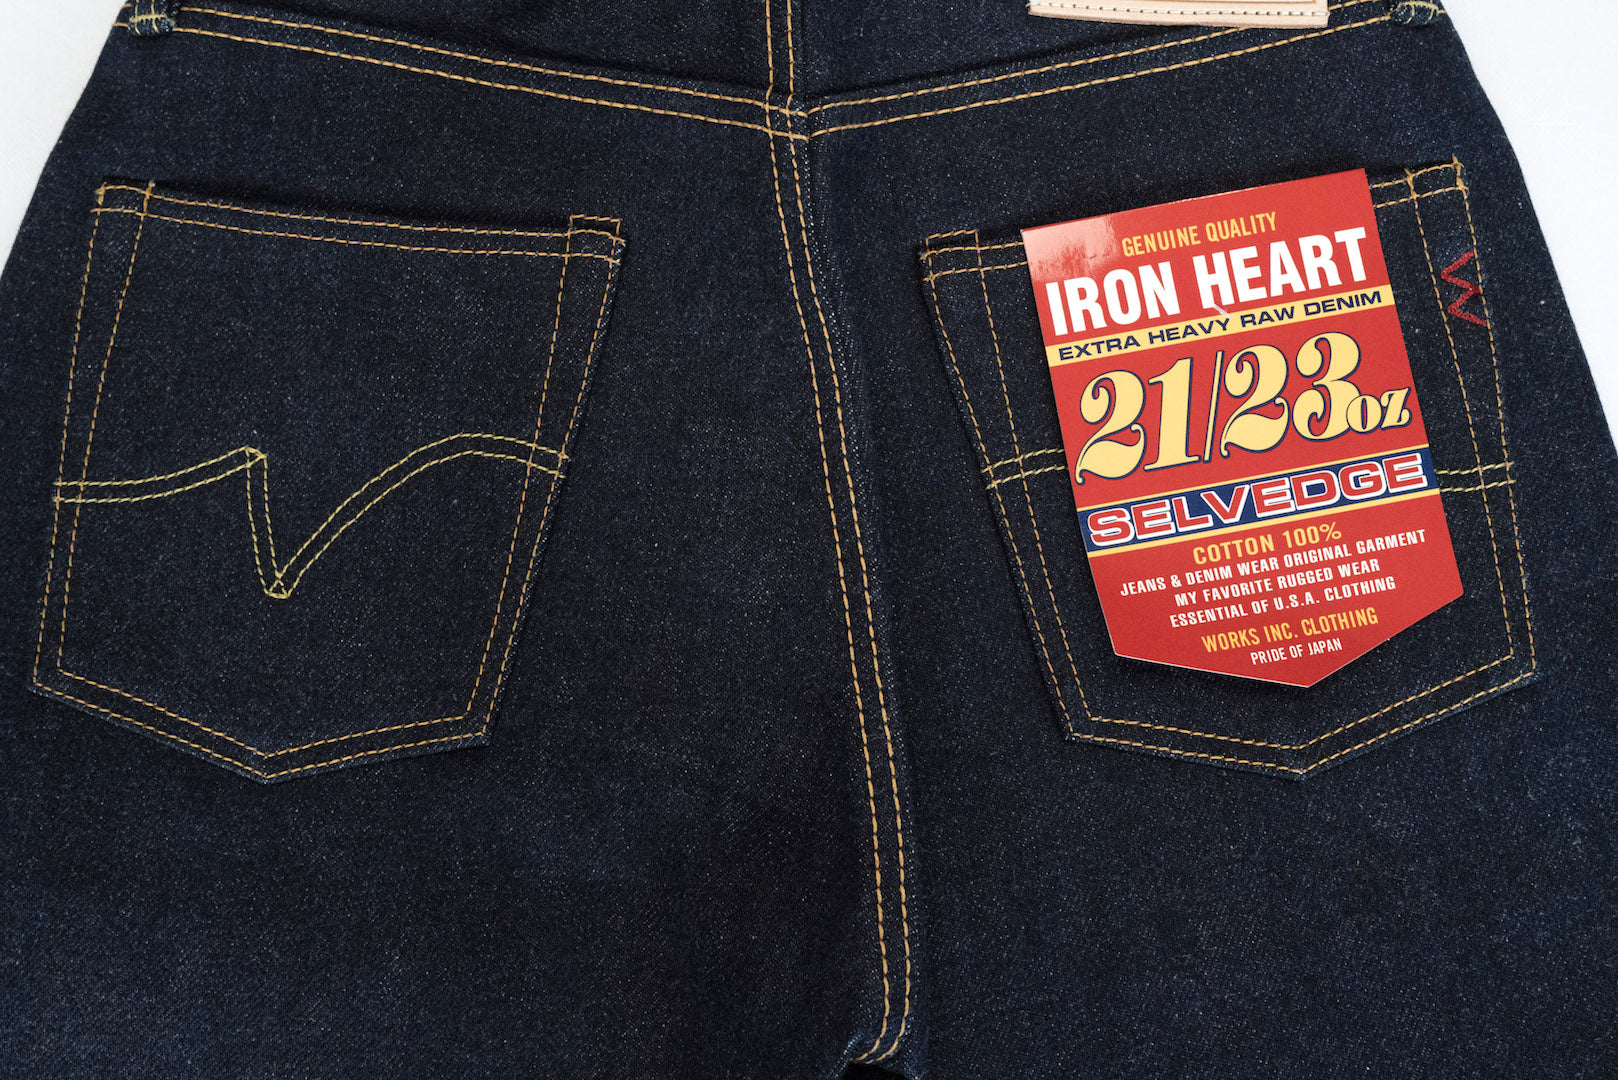 Iron Heart 777S-UHR 21/23oz Denim (Super Slim Tapered Fit)